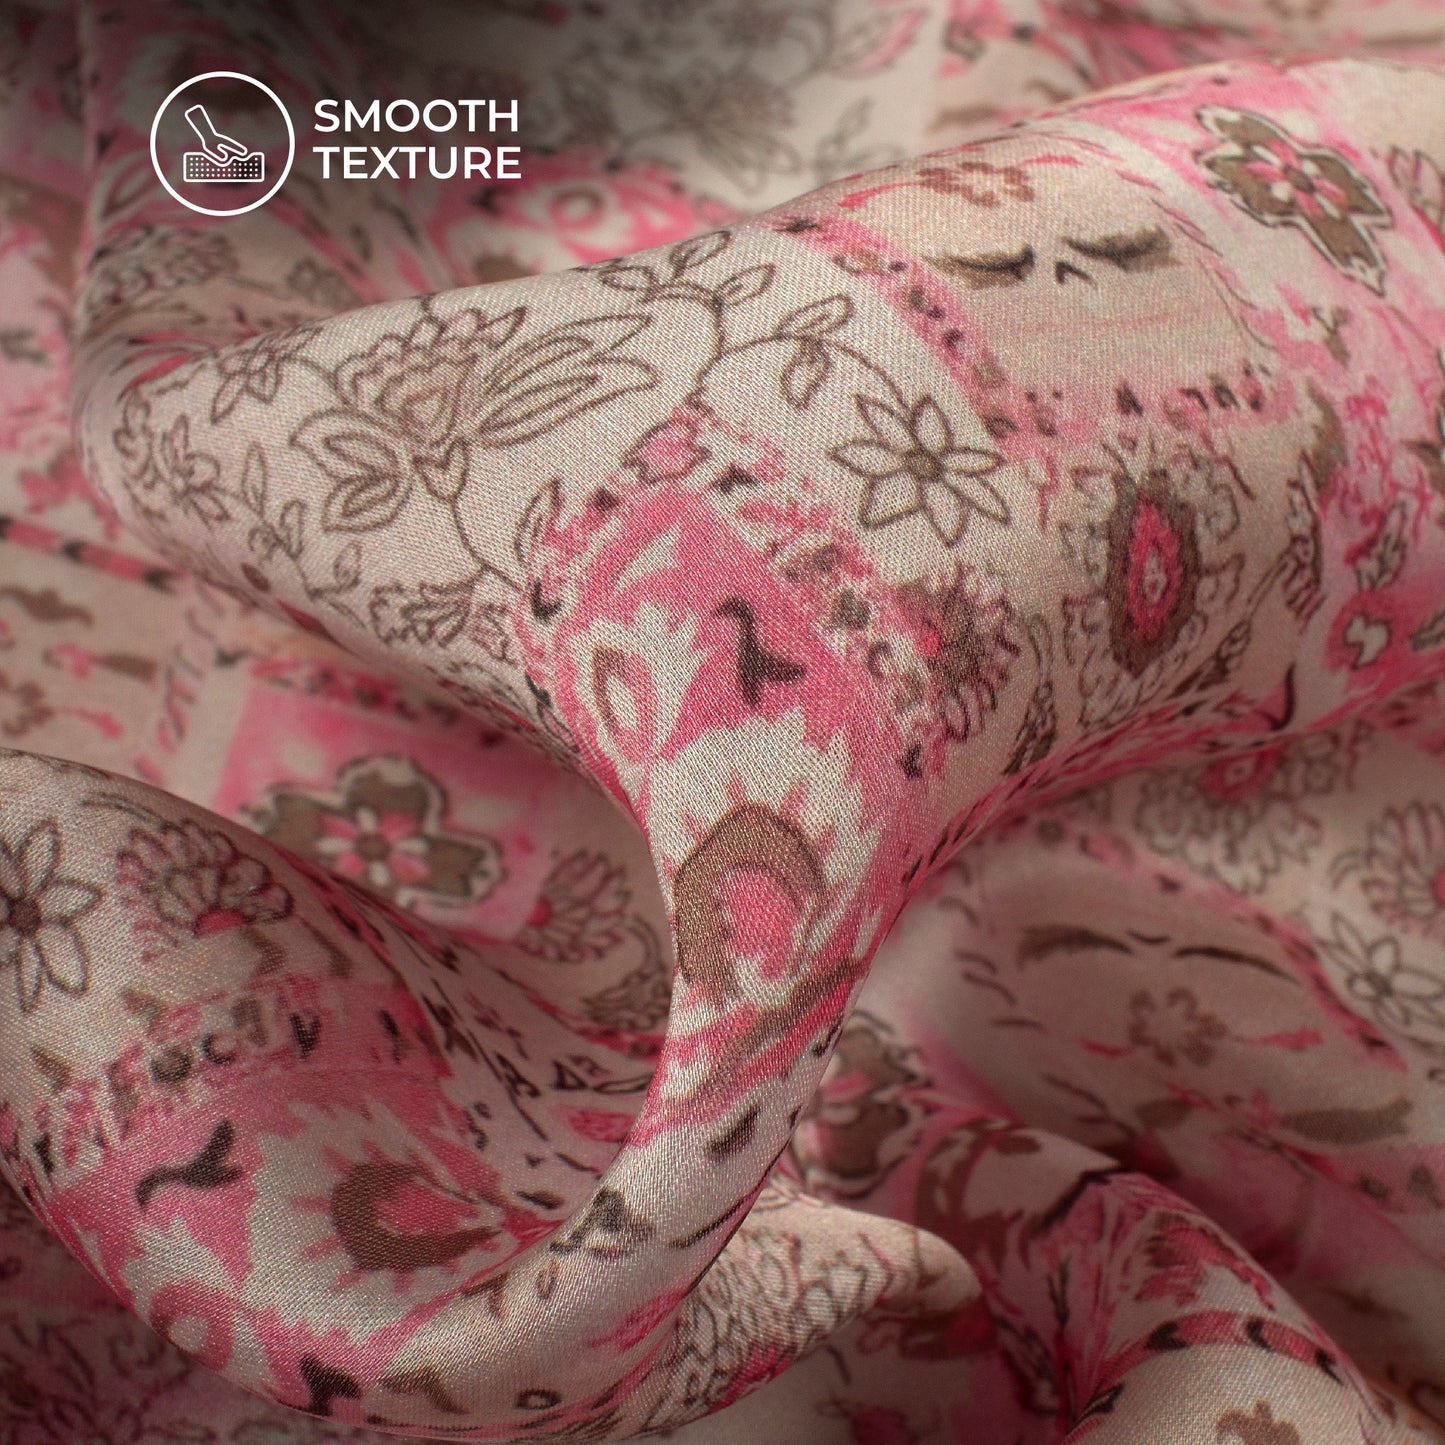 Lovely Pink Floral Digital Print Georgette Satin Fabric